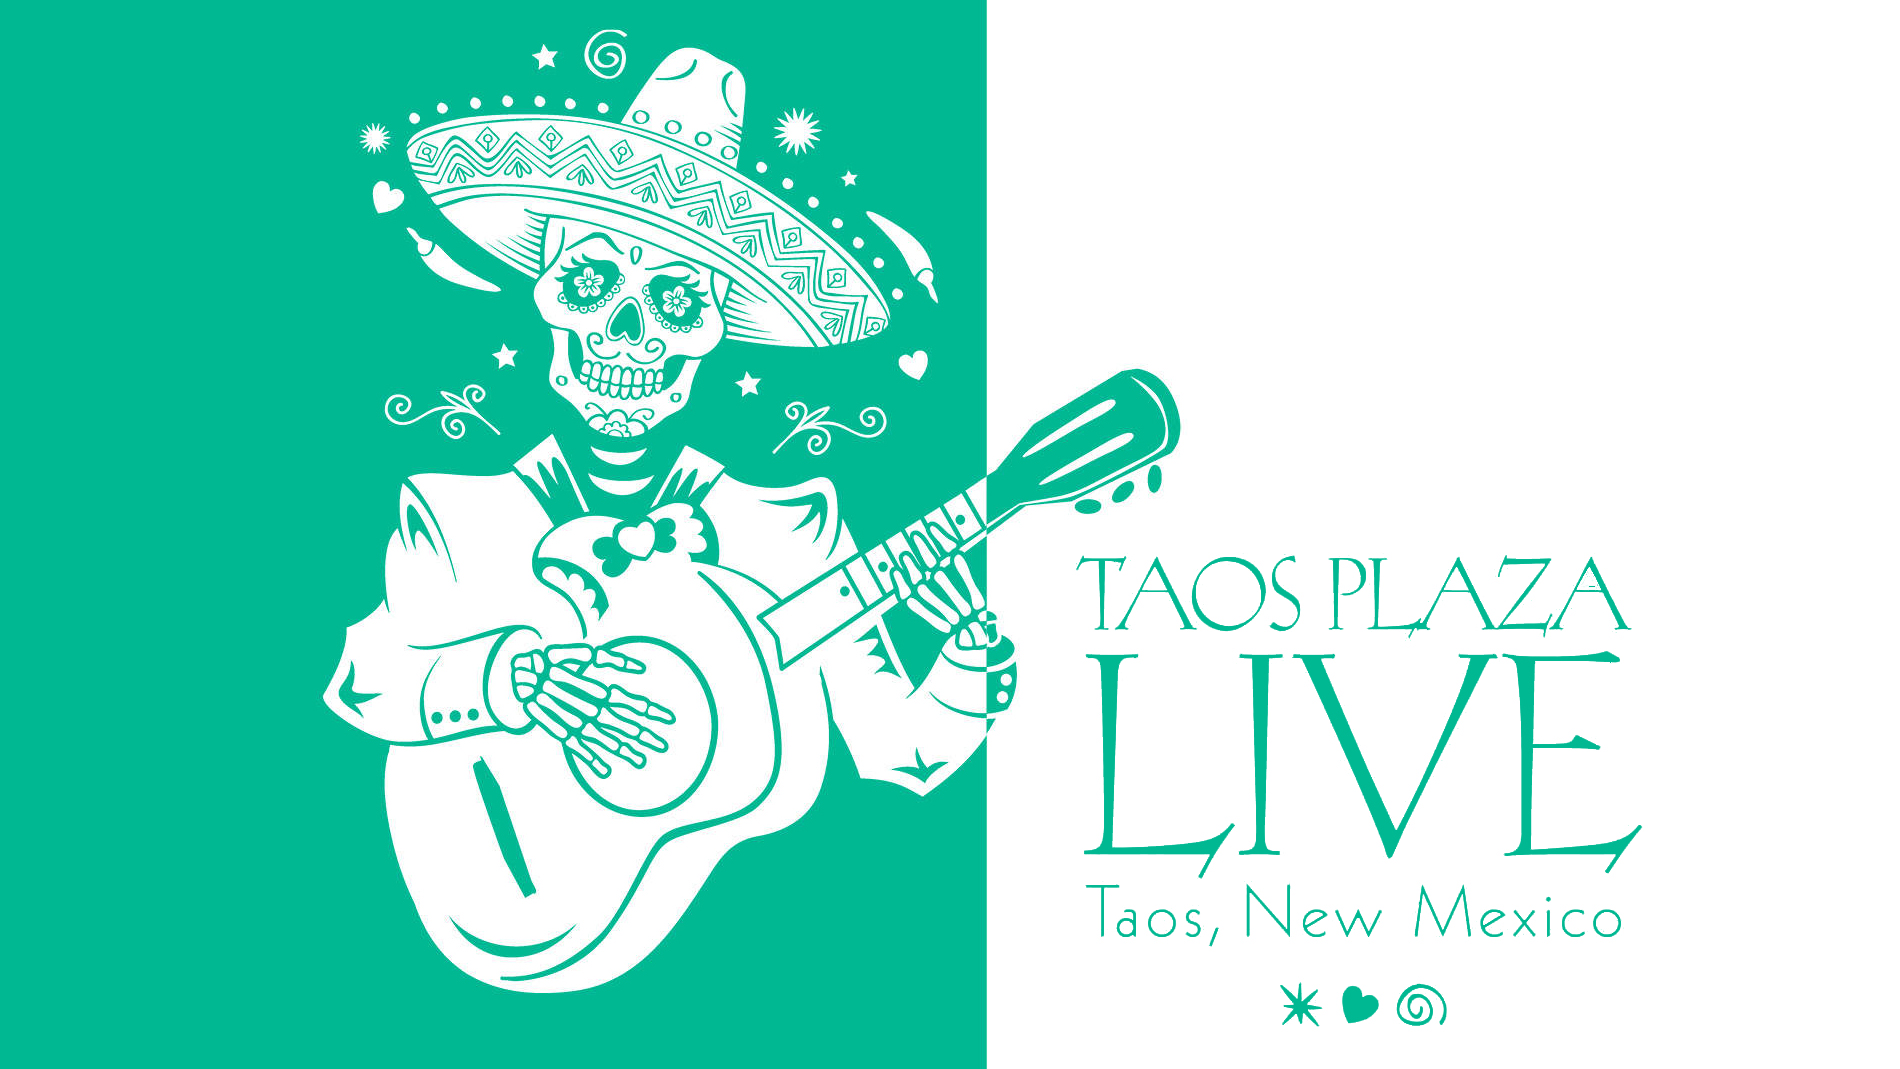 Taos Plaza Live music